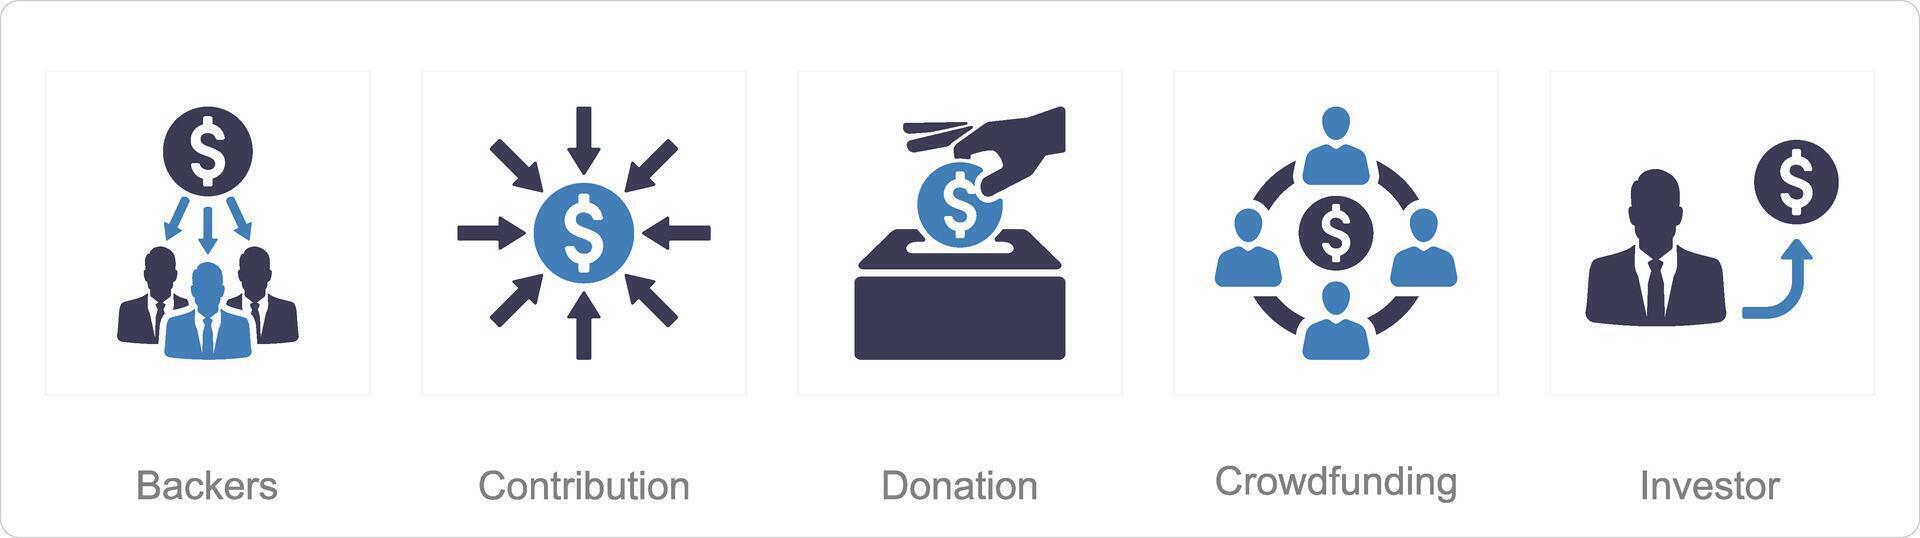 un conjunto de 5 5 recaudación de fondos íconos como patrocinadores, contribución, donación vector